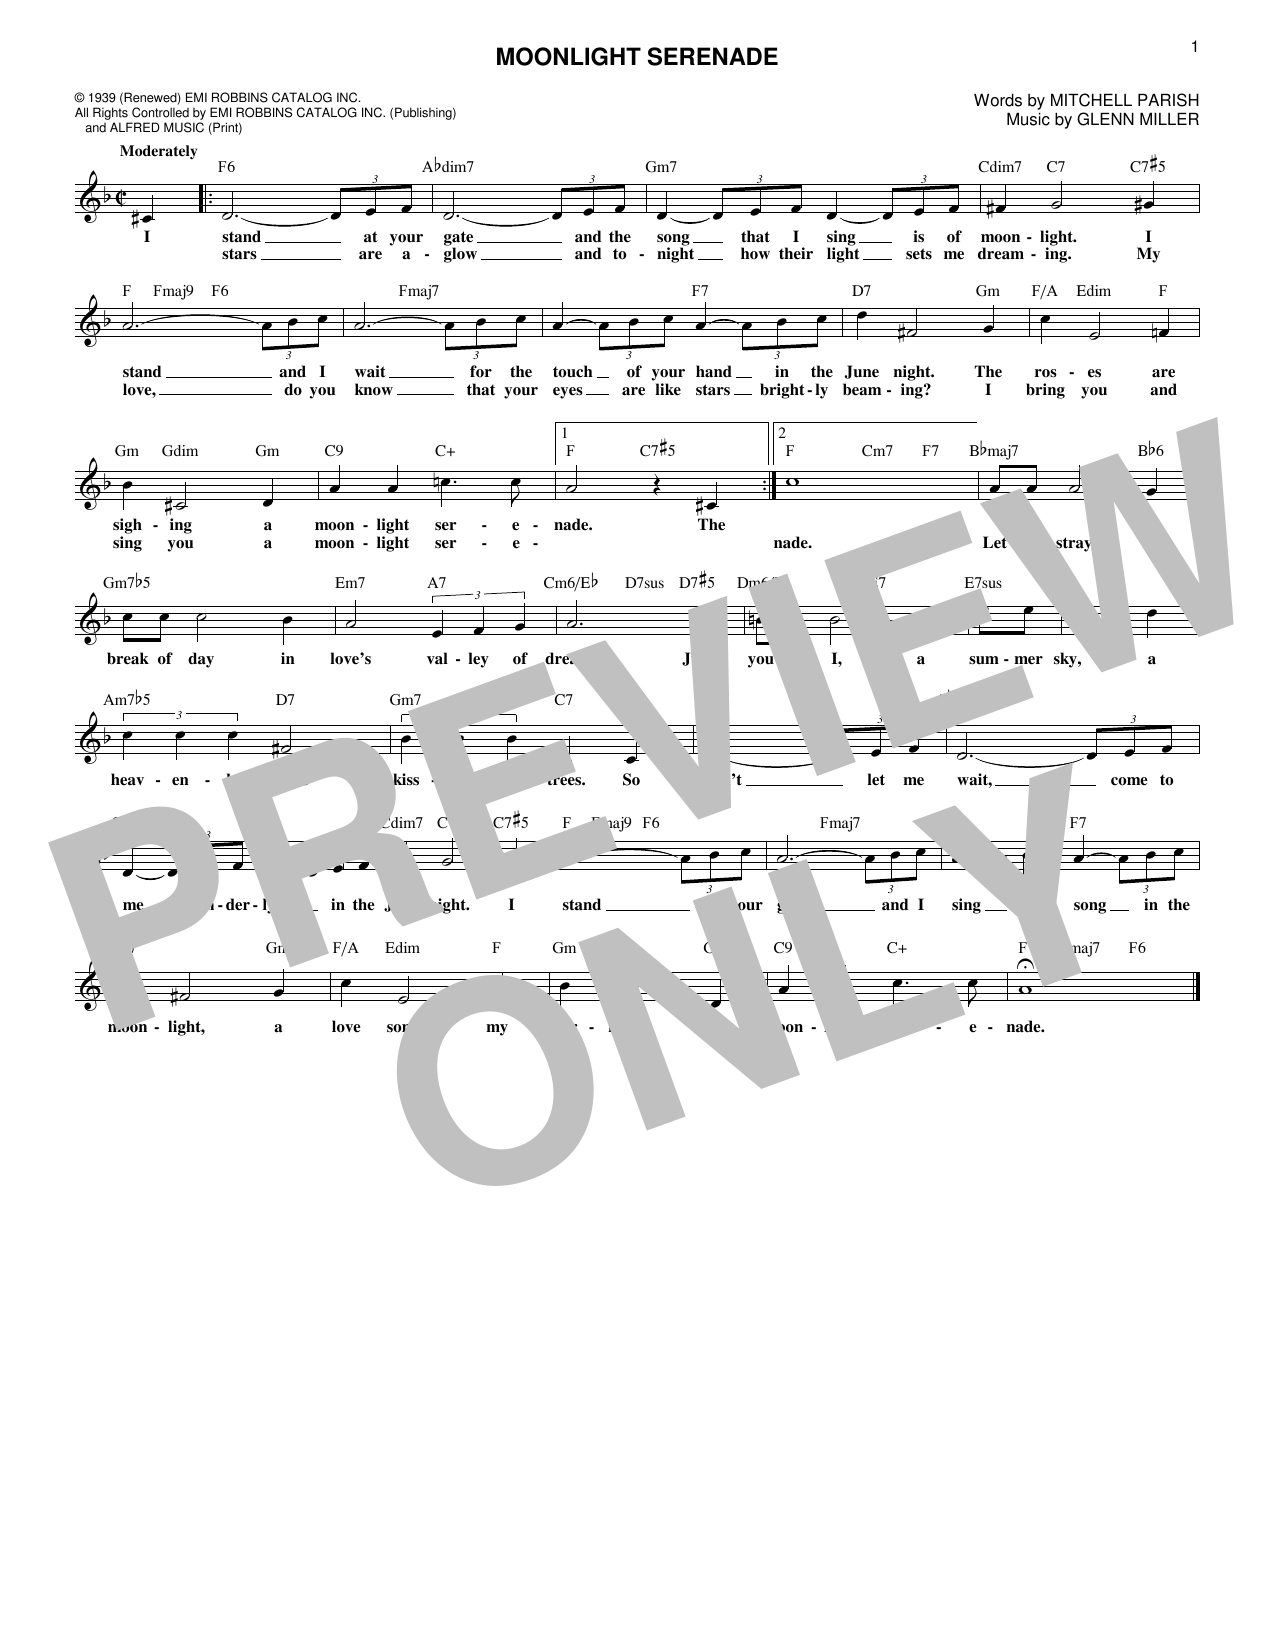 Glen Miller Moonlight Serenade Sheet Music Notes & Chords for Melody Line, Lyrics & Chords - Download or Print PDF